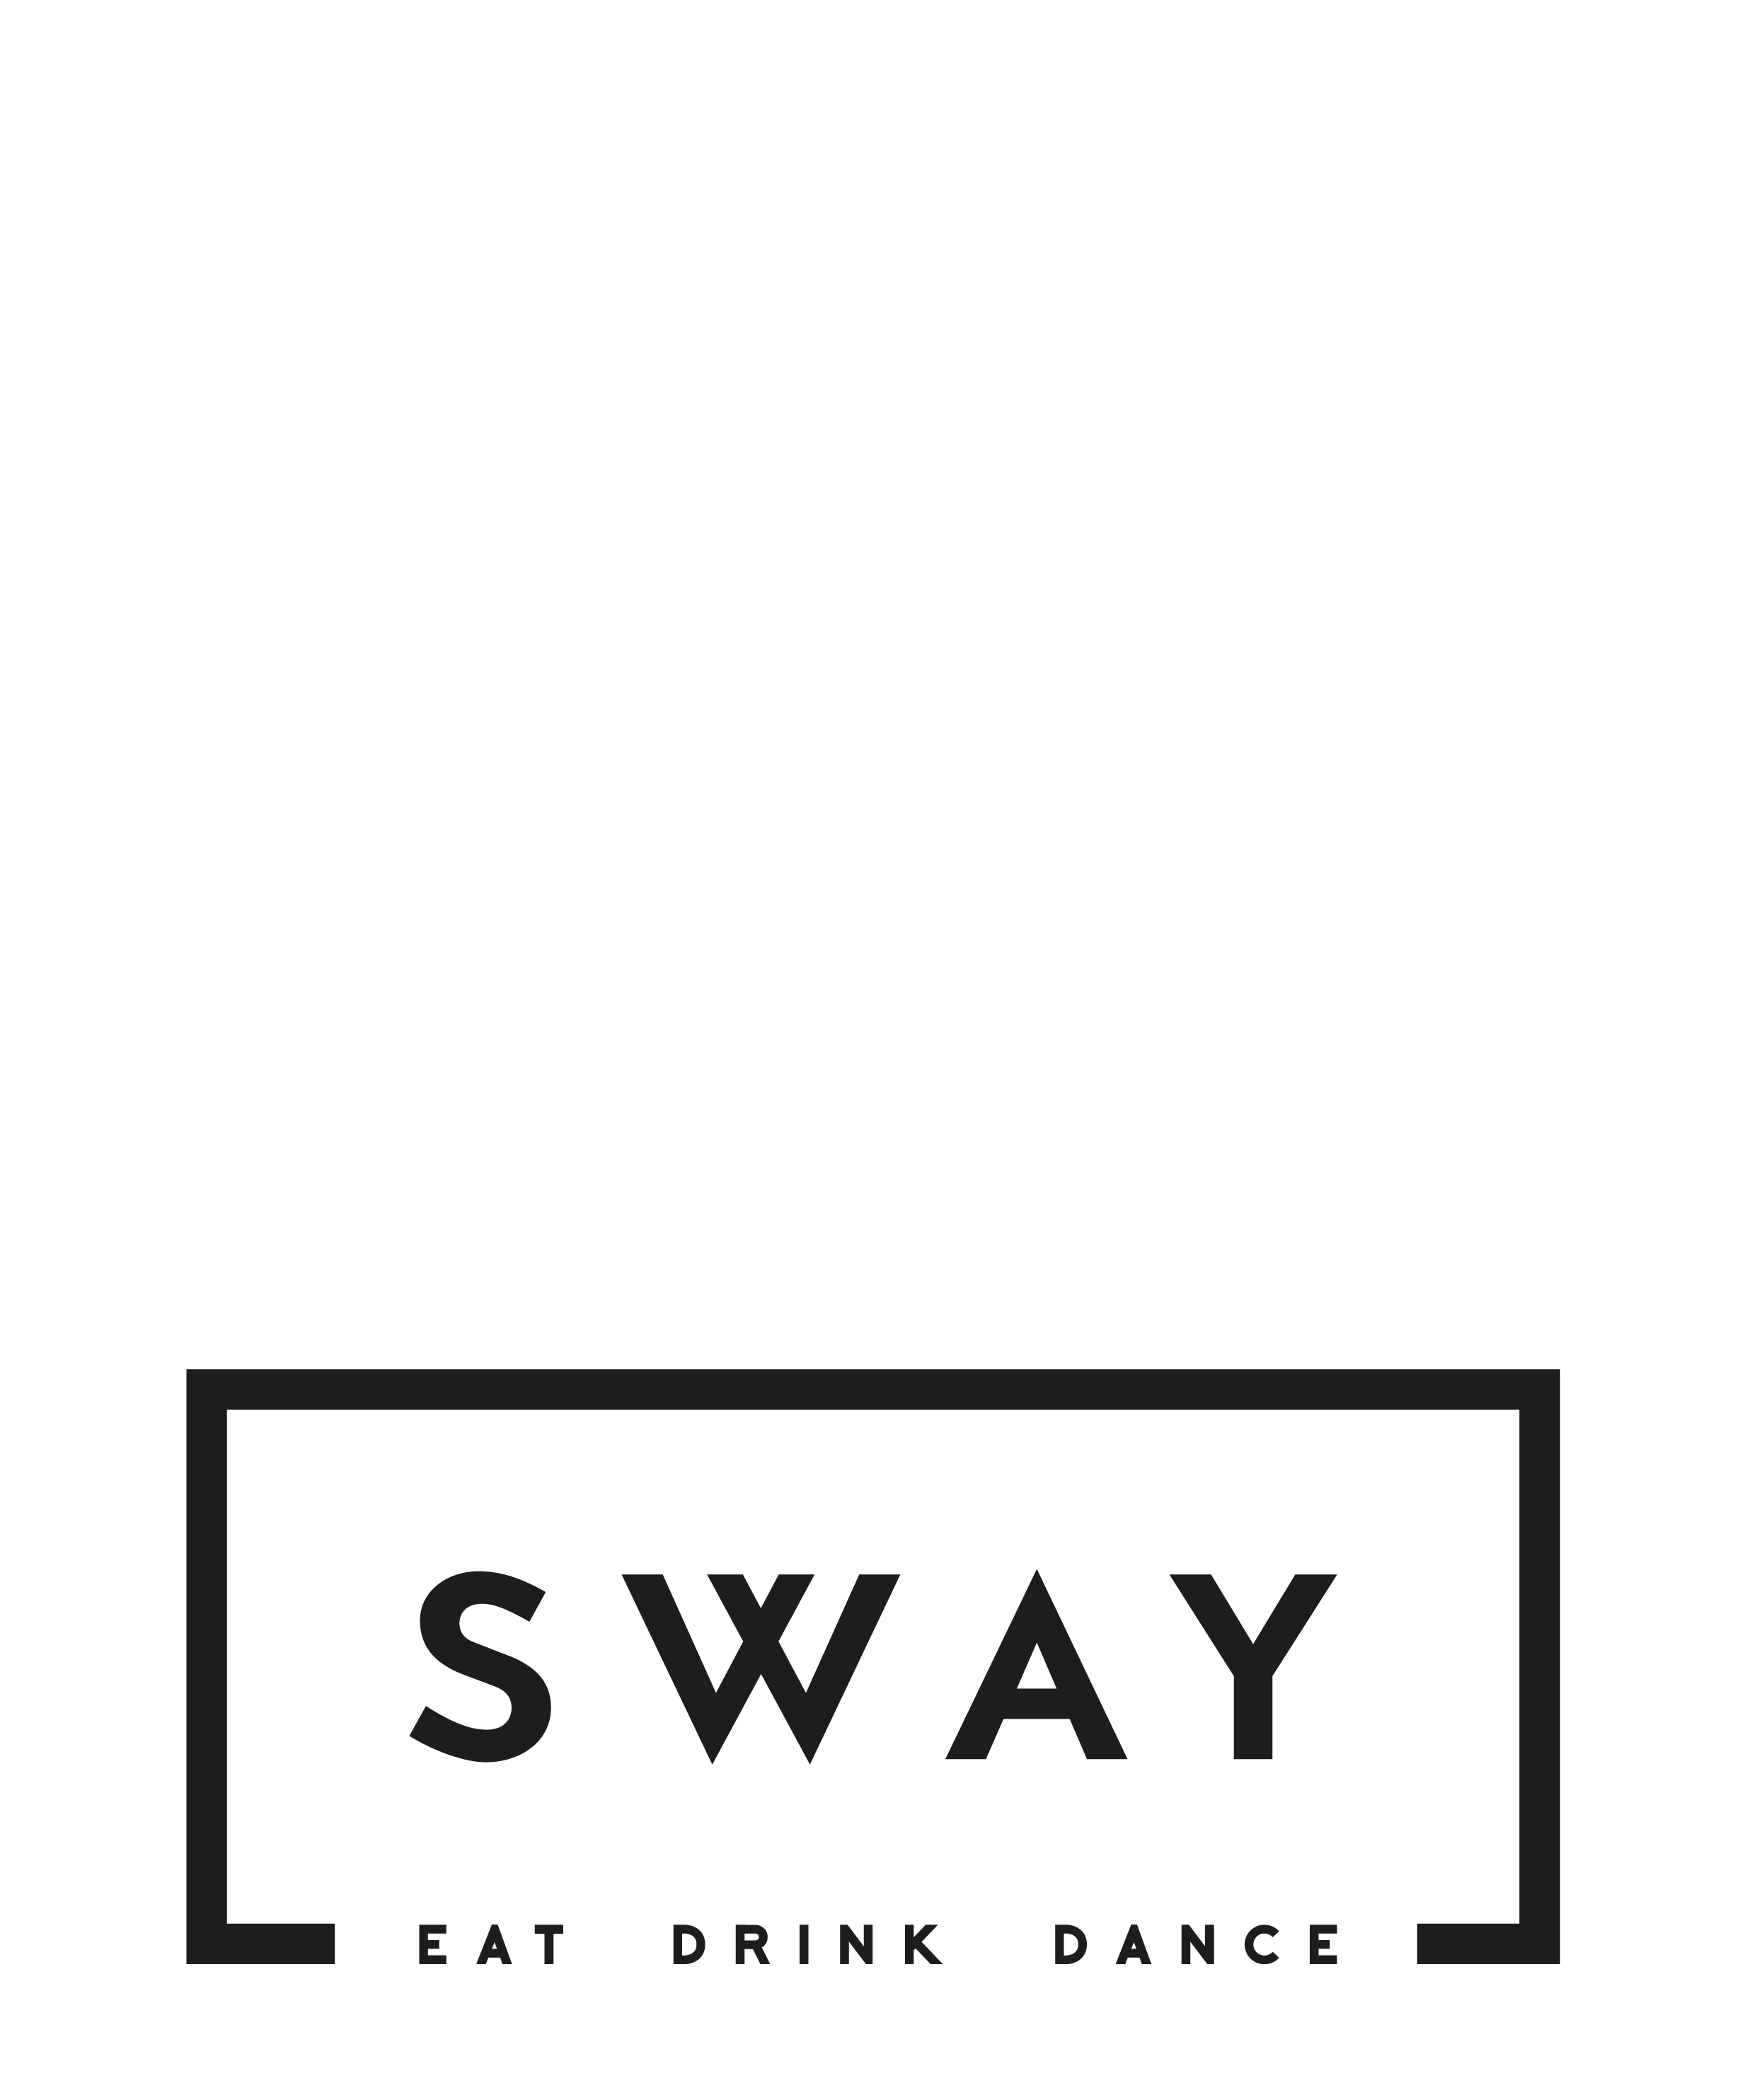 Sway Logo - SWAY LOGO BLACK AND WHITE VERSIONS - Freshers LDN